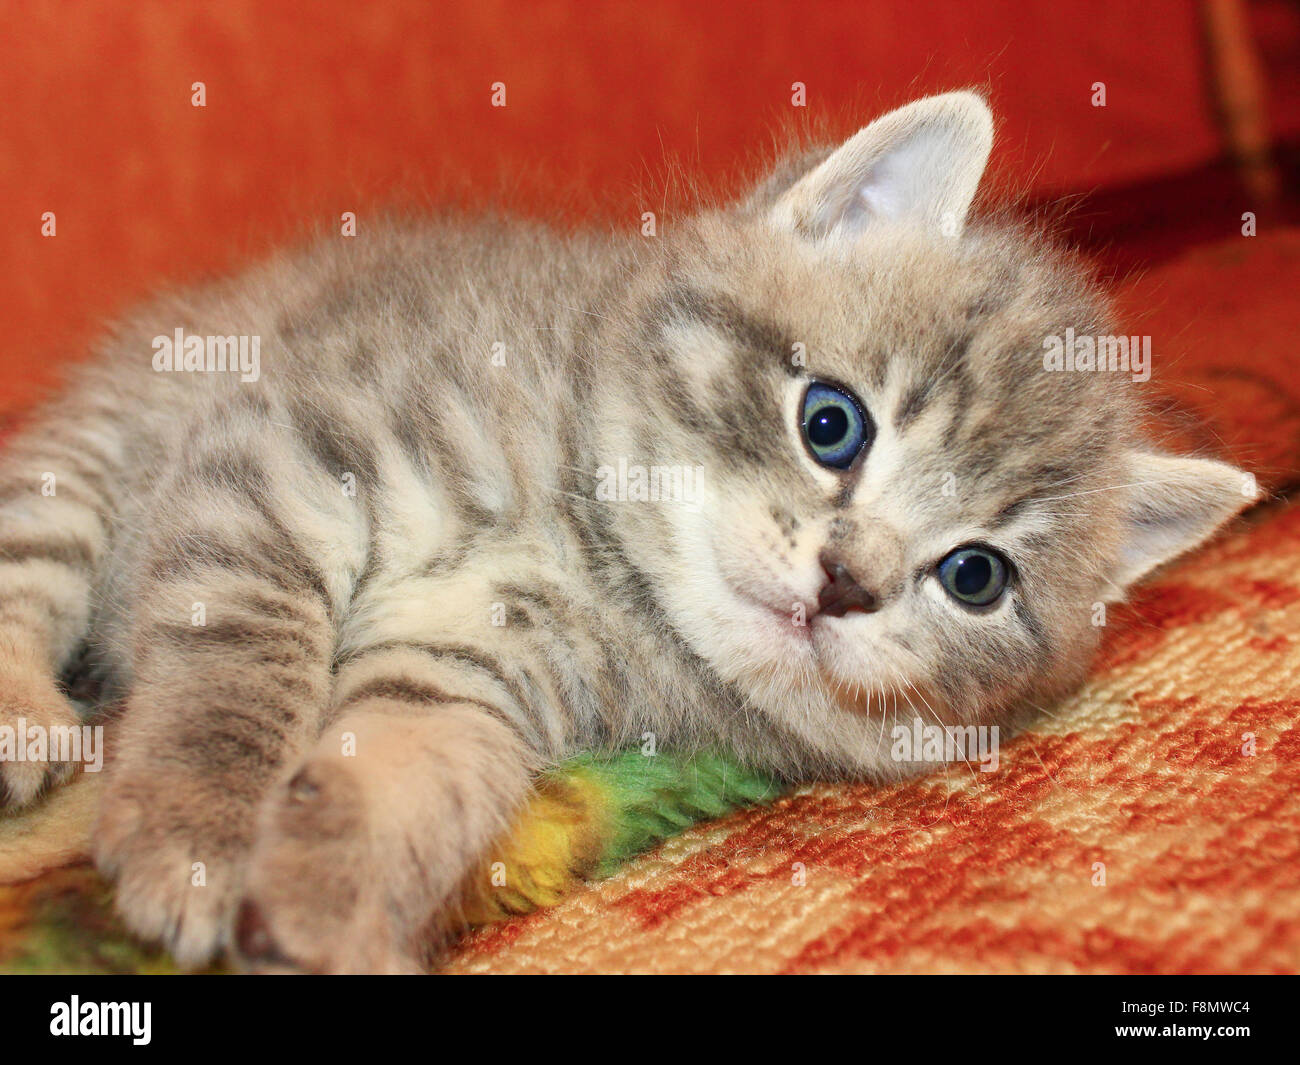 little nice and amusing kitty of Scottish Straight breed Stock Photo